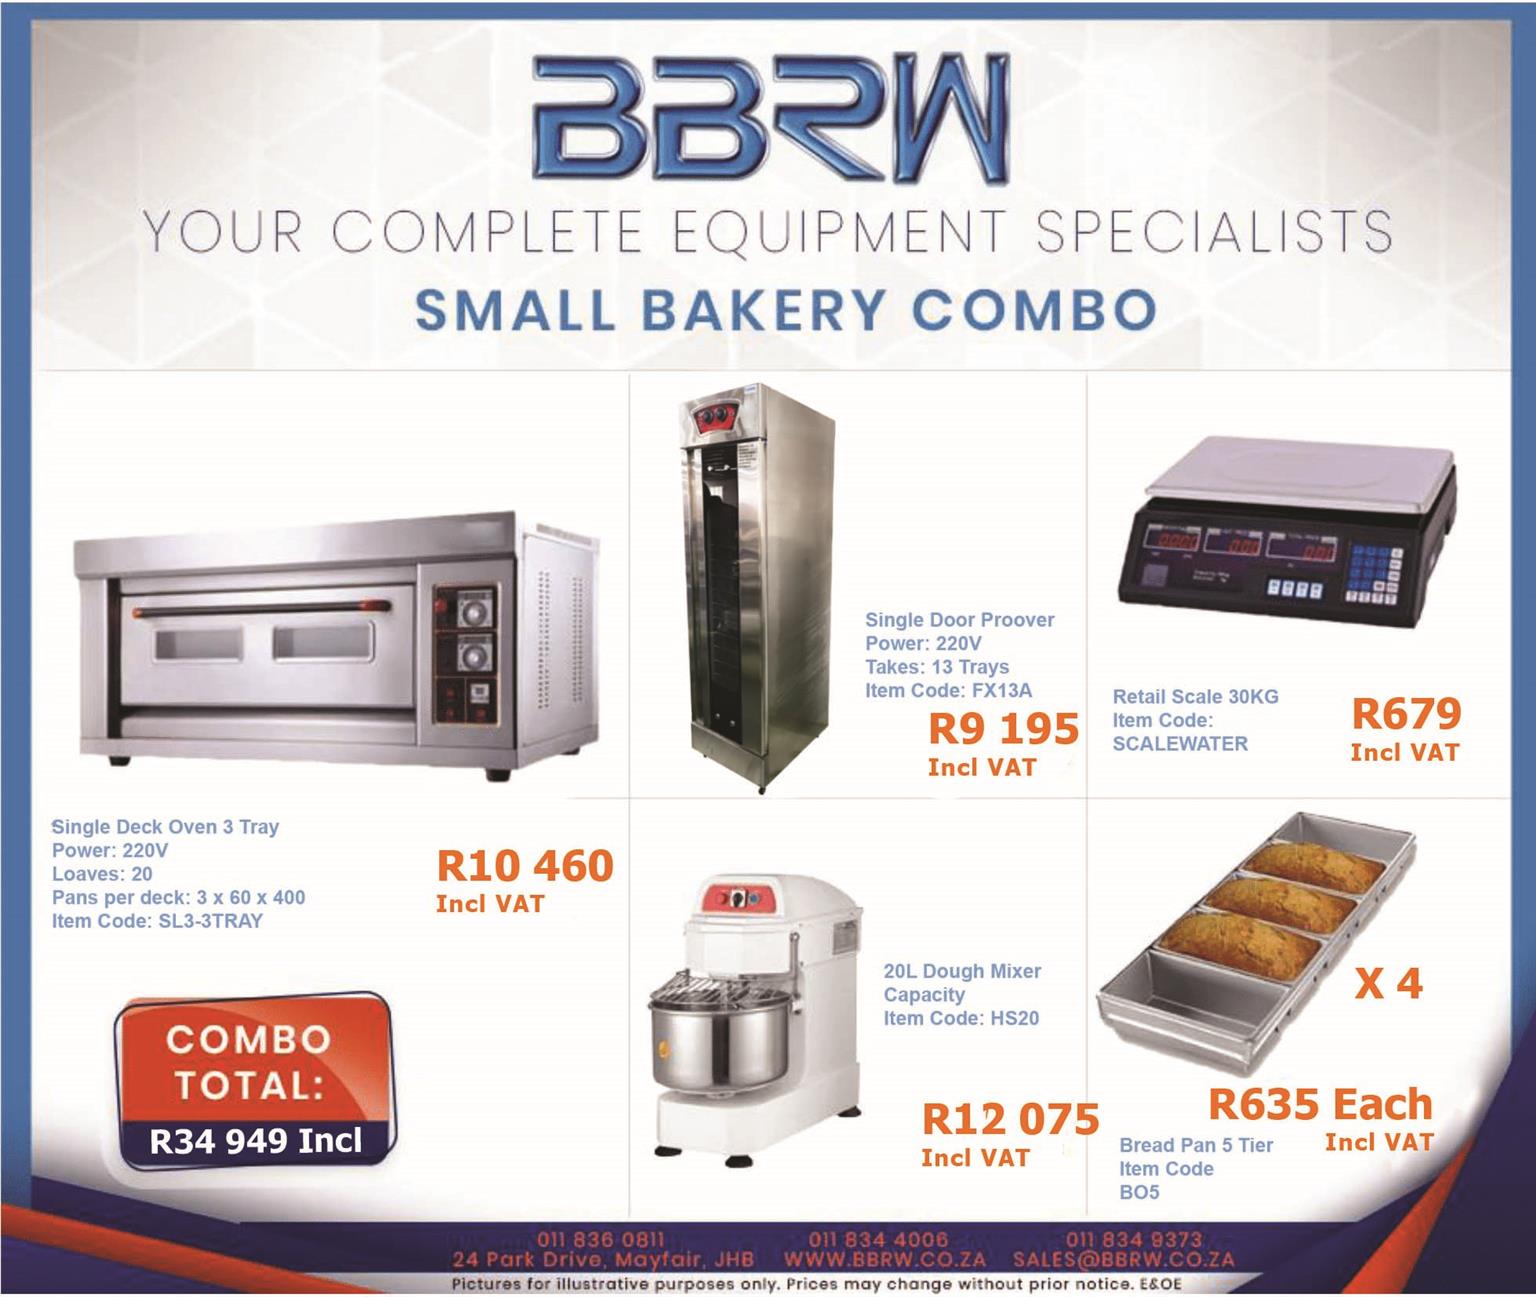 BBRW SPECIAL - Small Bakery Combo